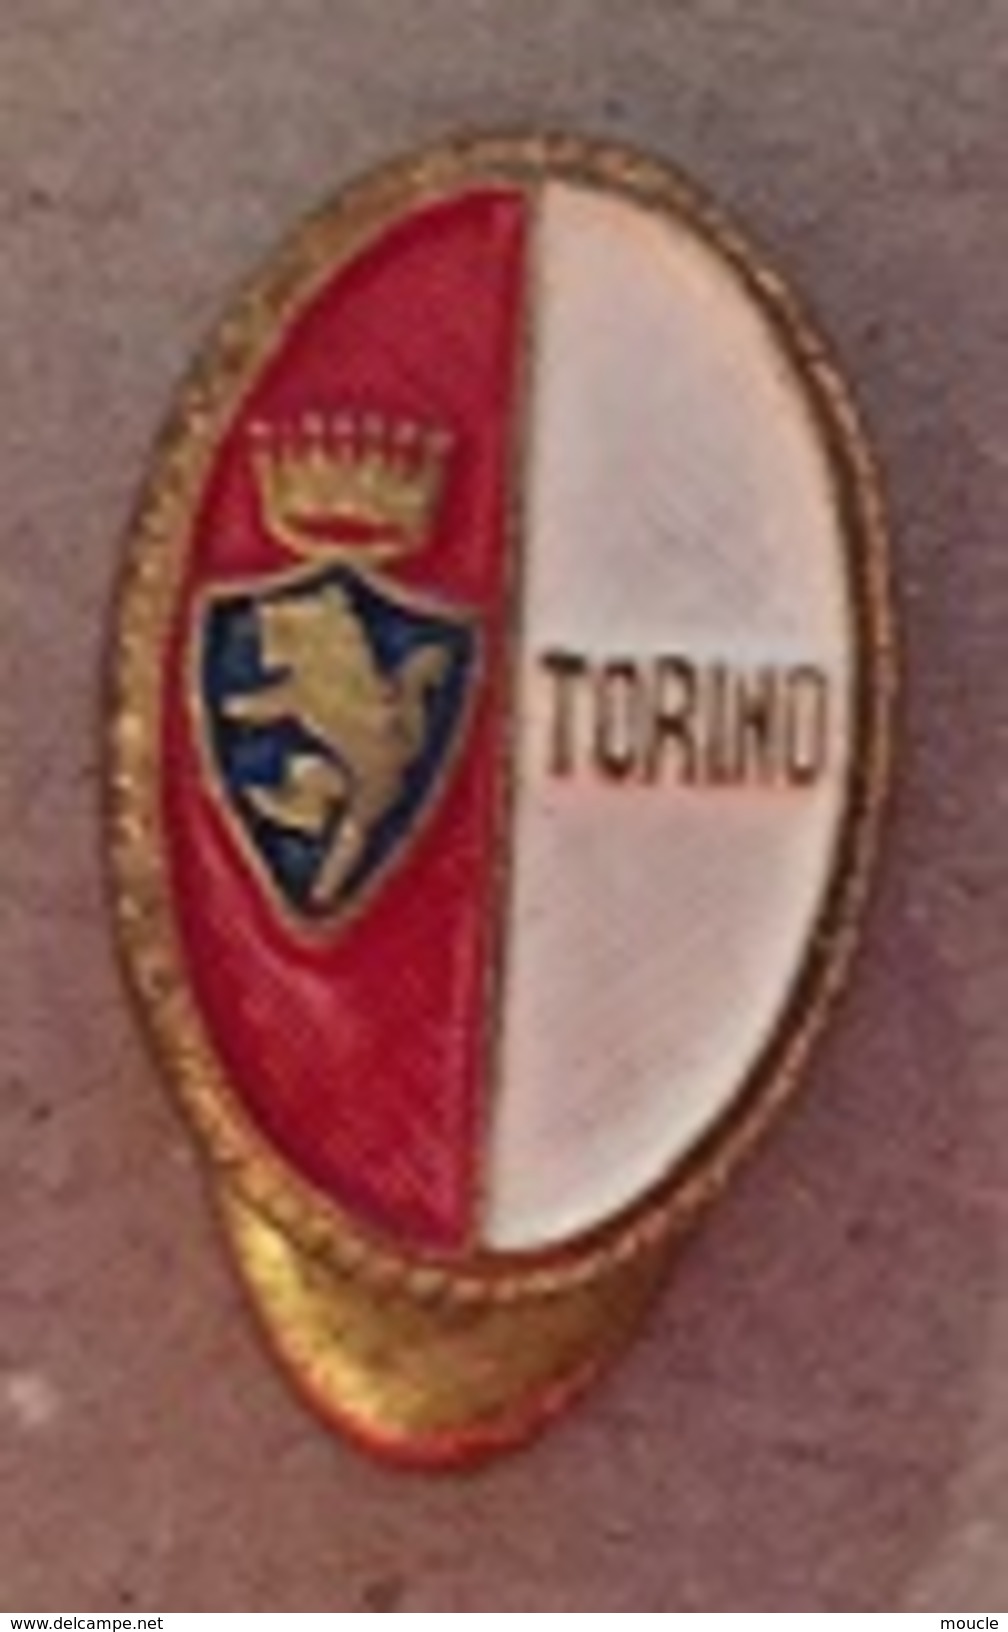 BOUTONNIERE - FOOTBALL - FOOT - SOCCER - FUTBOL - CACIO - TORINO - TURIN - ITALIA - ITALIE - TORO - TAUREAU - Football